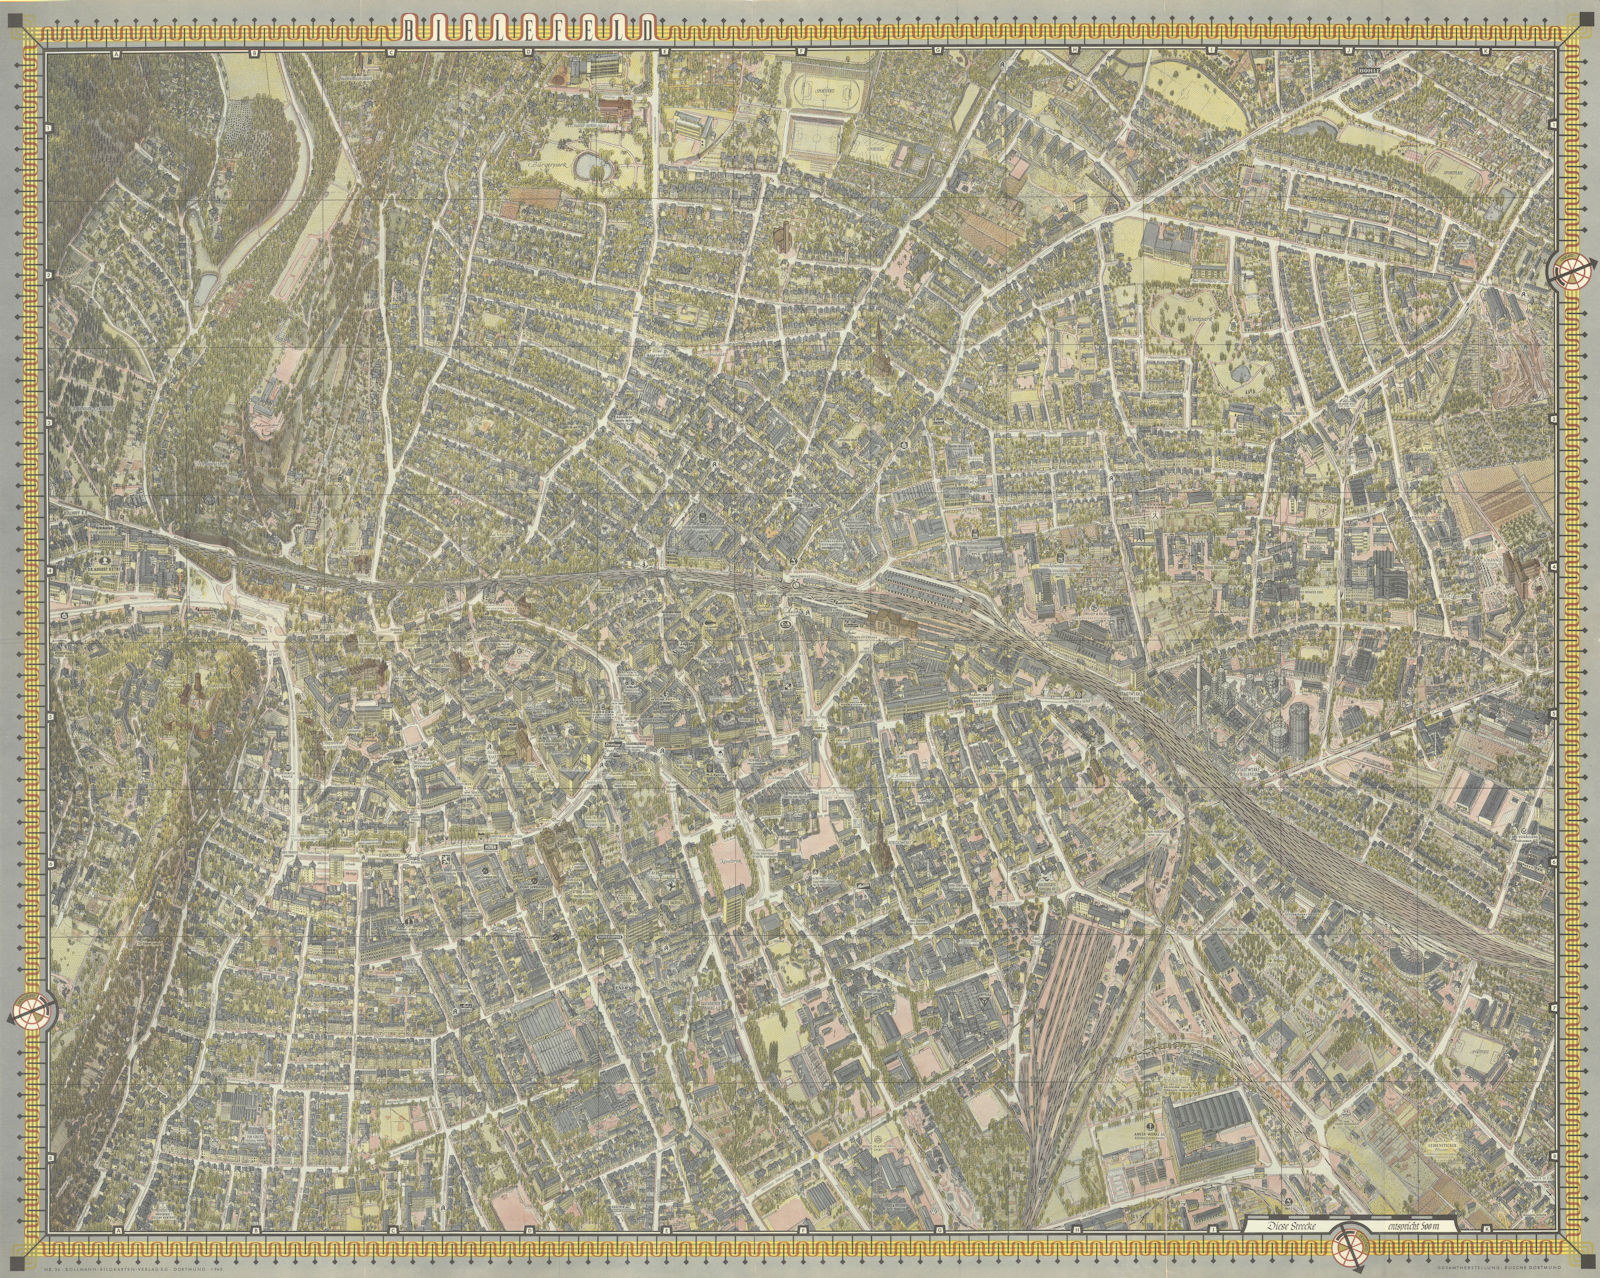 Associate Product Bielefeld pictorial bird's eye view city plan #26 by Hermann Bollmann 1960 map